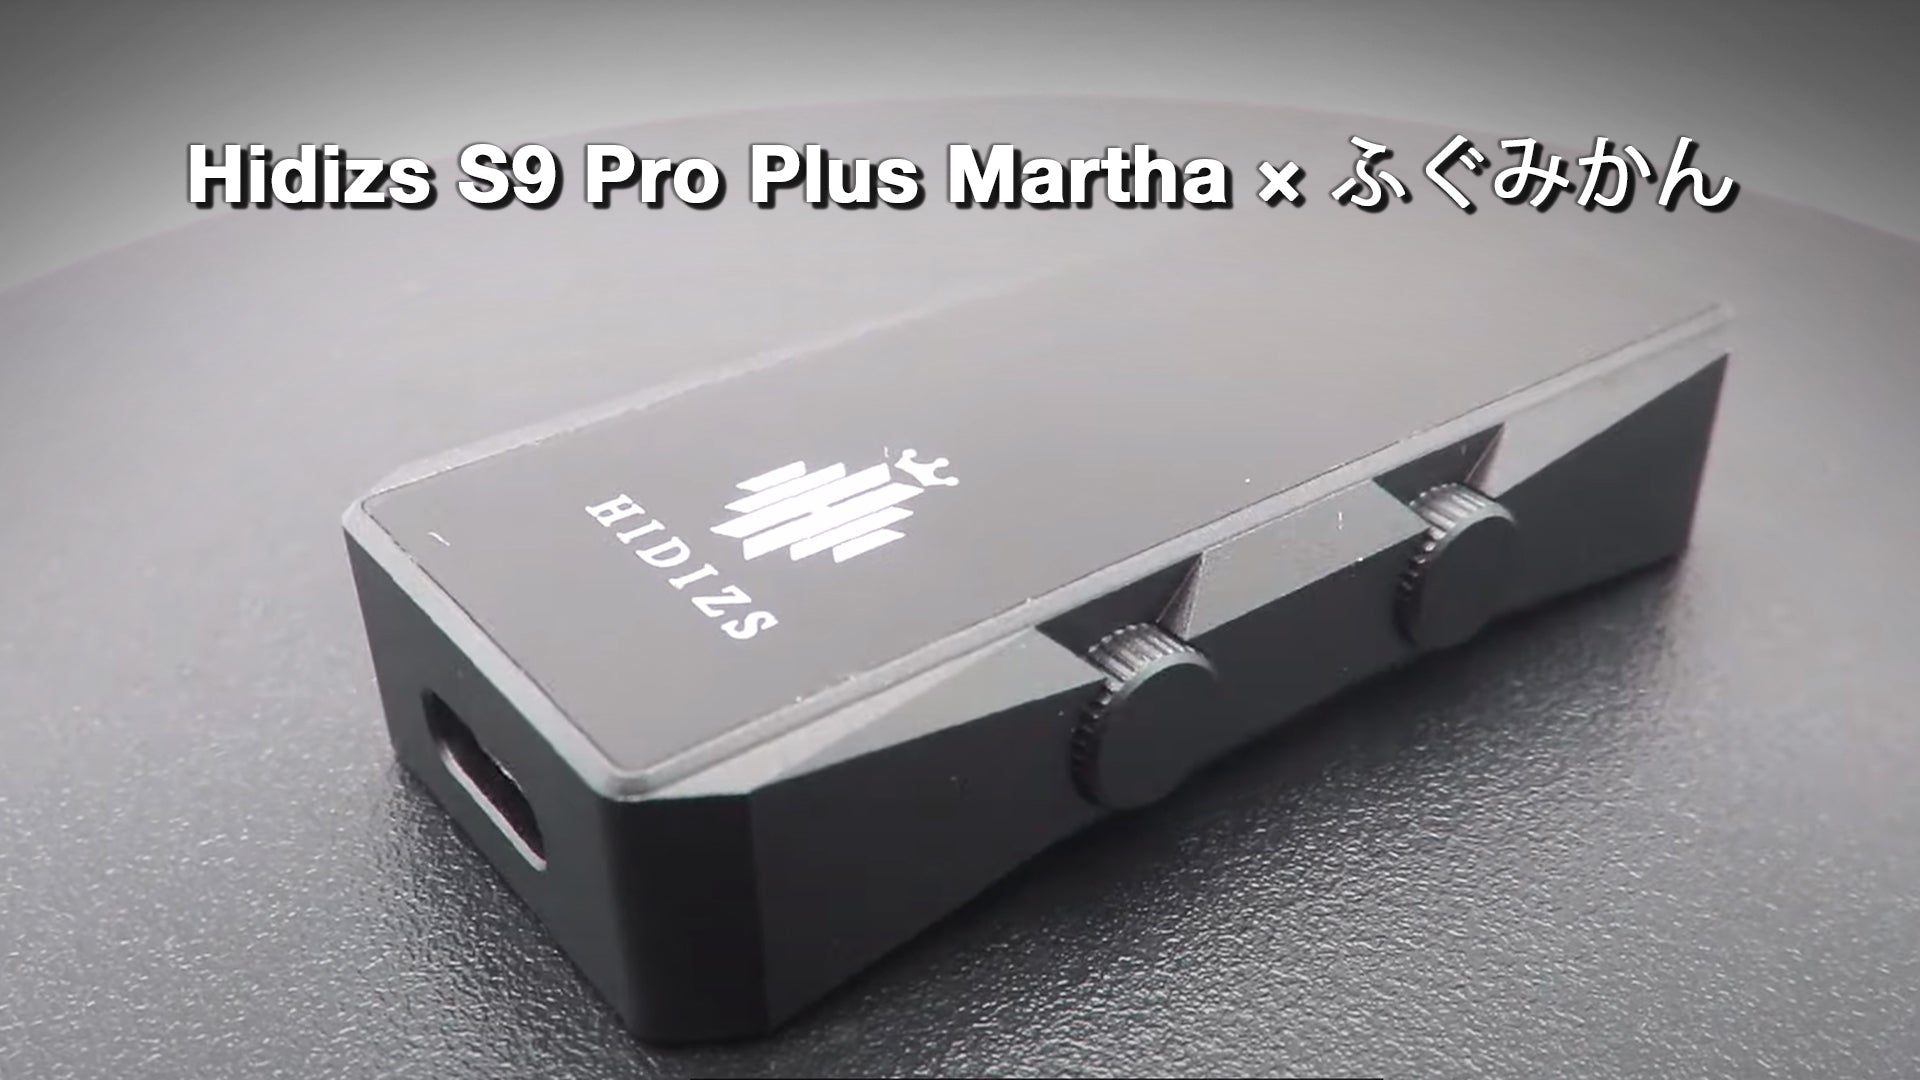 Hidizs S9 Pro Plus Martha Review - ふぐみかん